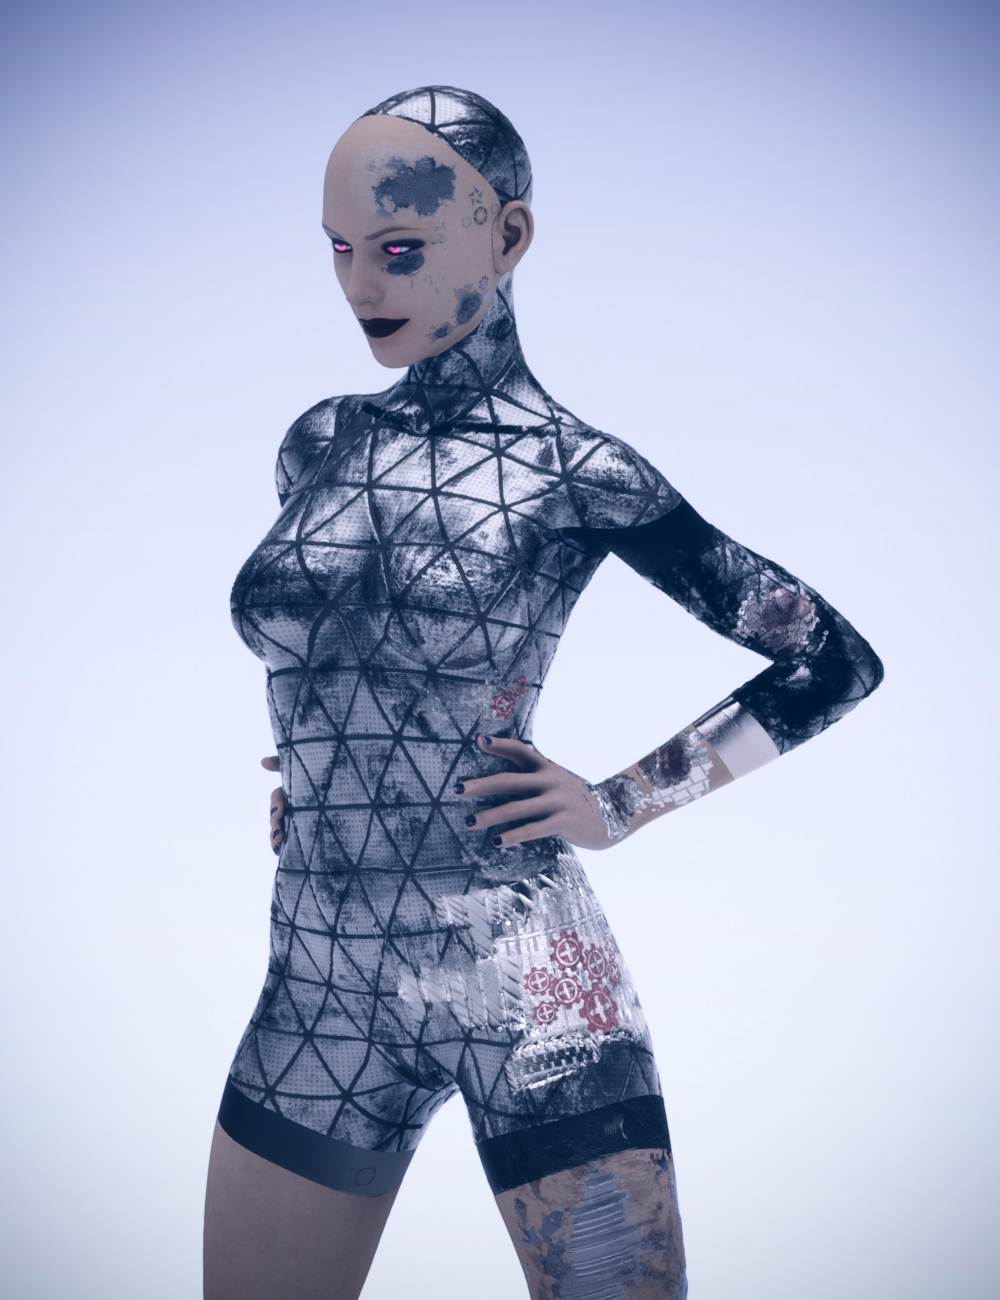 Battleworn Female Bot - Genesis 3 and 8 Female Texture Set by: Dreamlight, 3D Models by Daz 3D